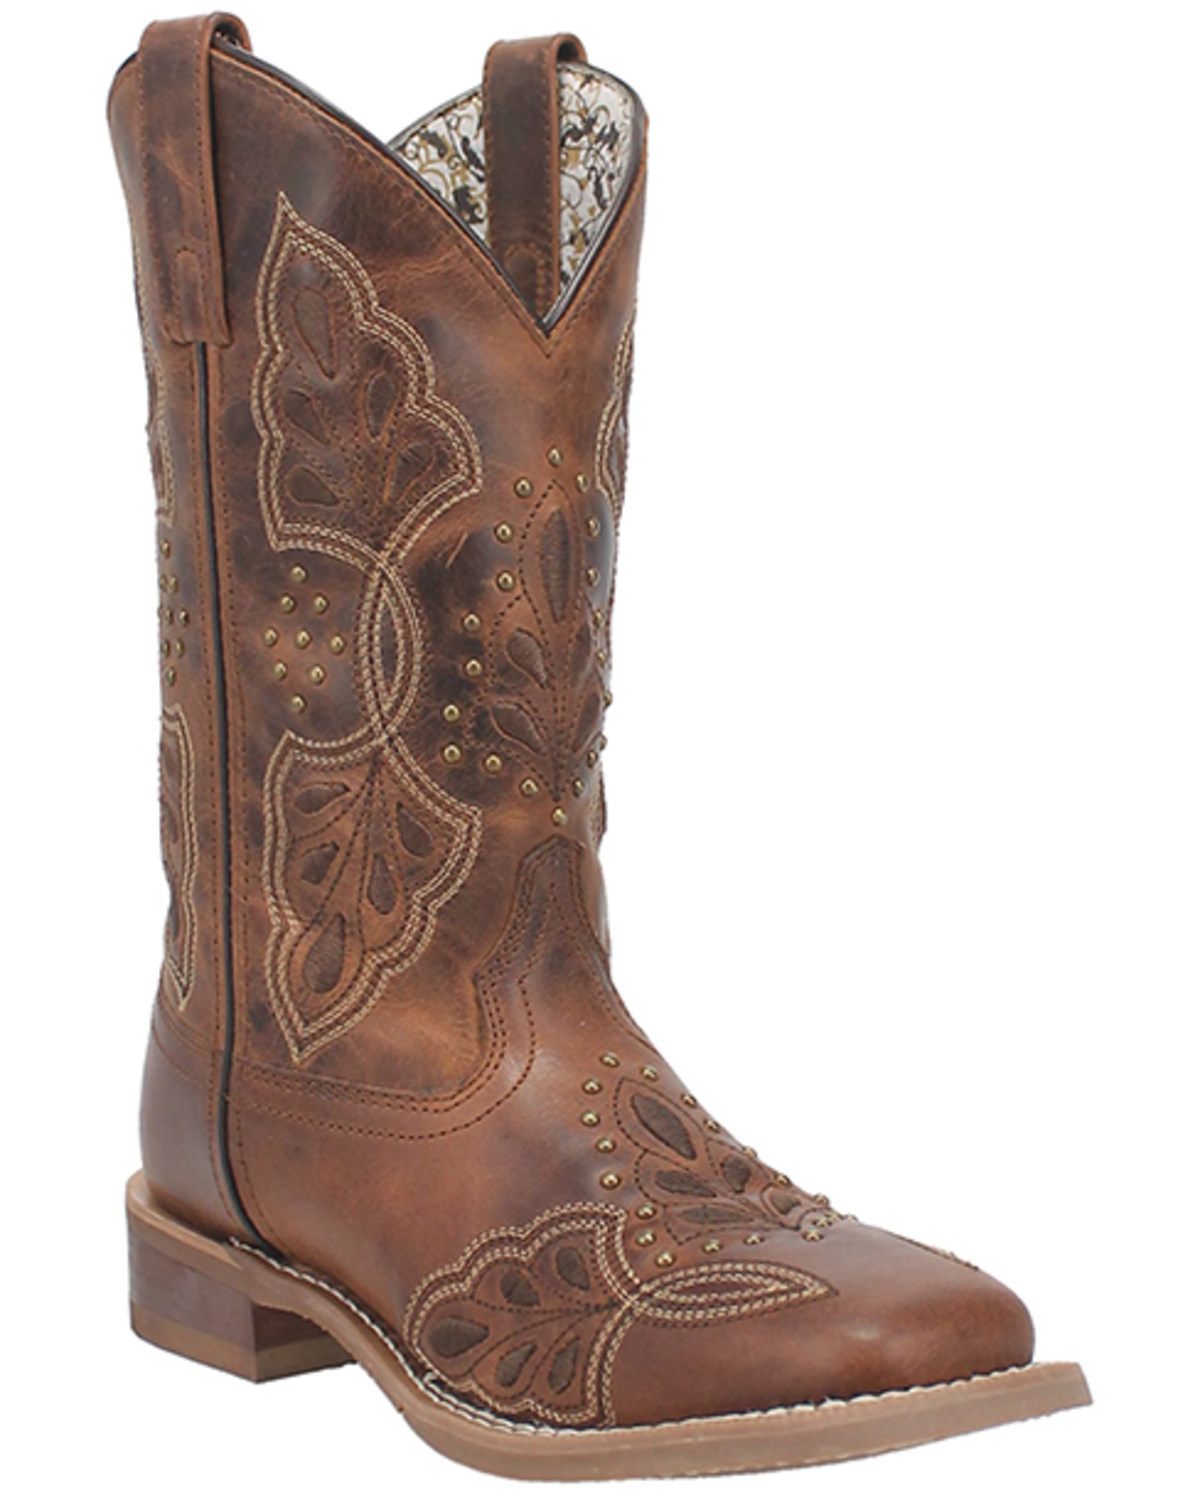 Laredo Women's Dionne Western Boots - Broad Square Toe